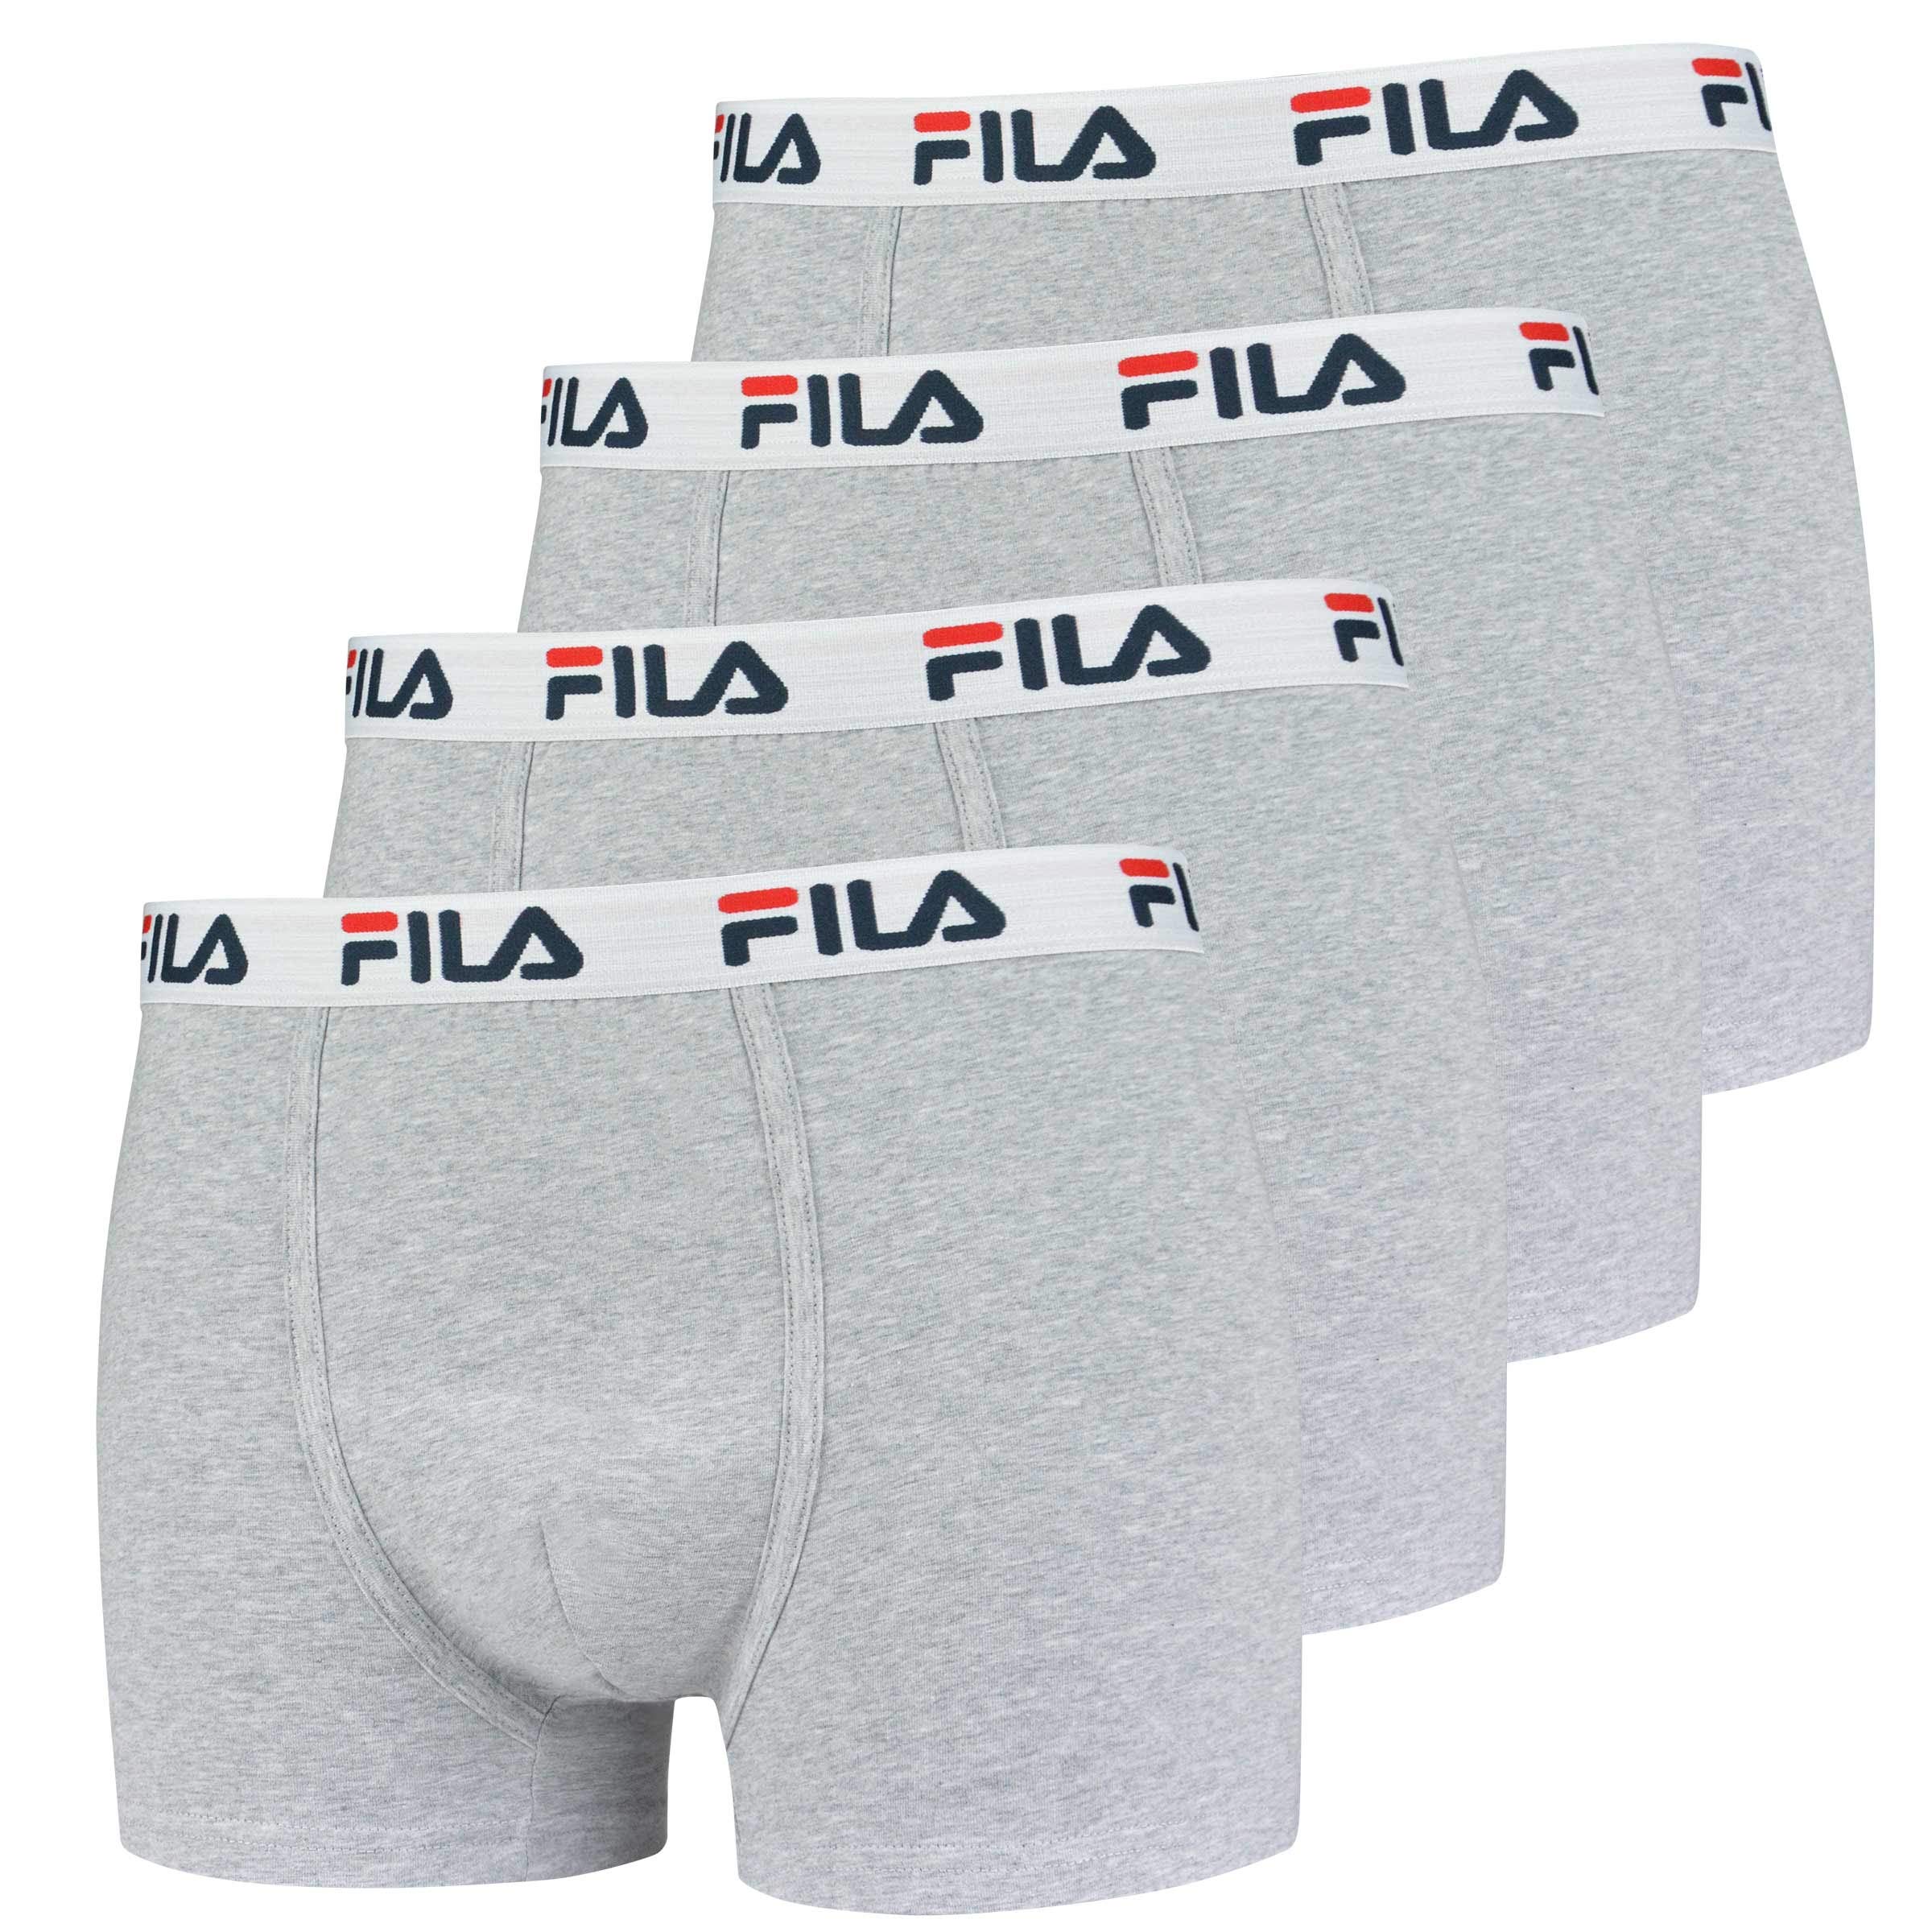 FILA 4er Vorteilspack Herren Boxershorts - Logo Pants - Einfarbig - Bequem - Stretch - viele Farben (Grau, 2XL - 4er Pack)